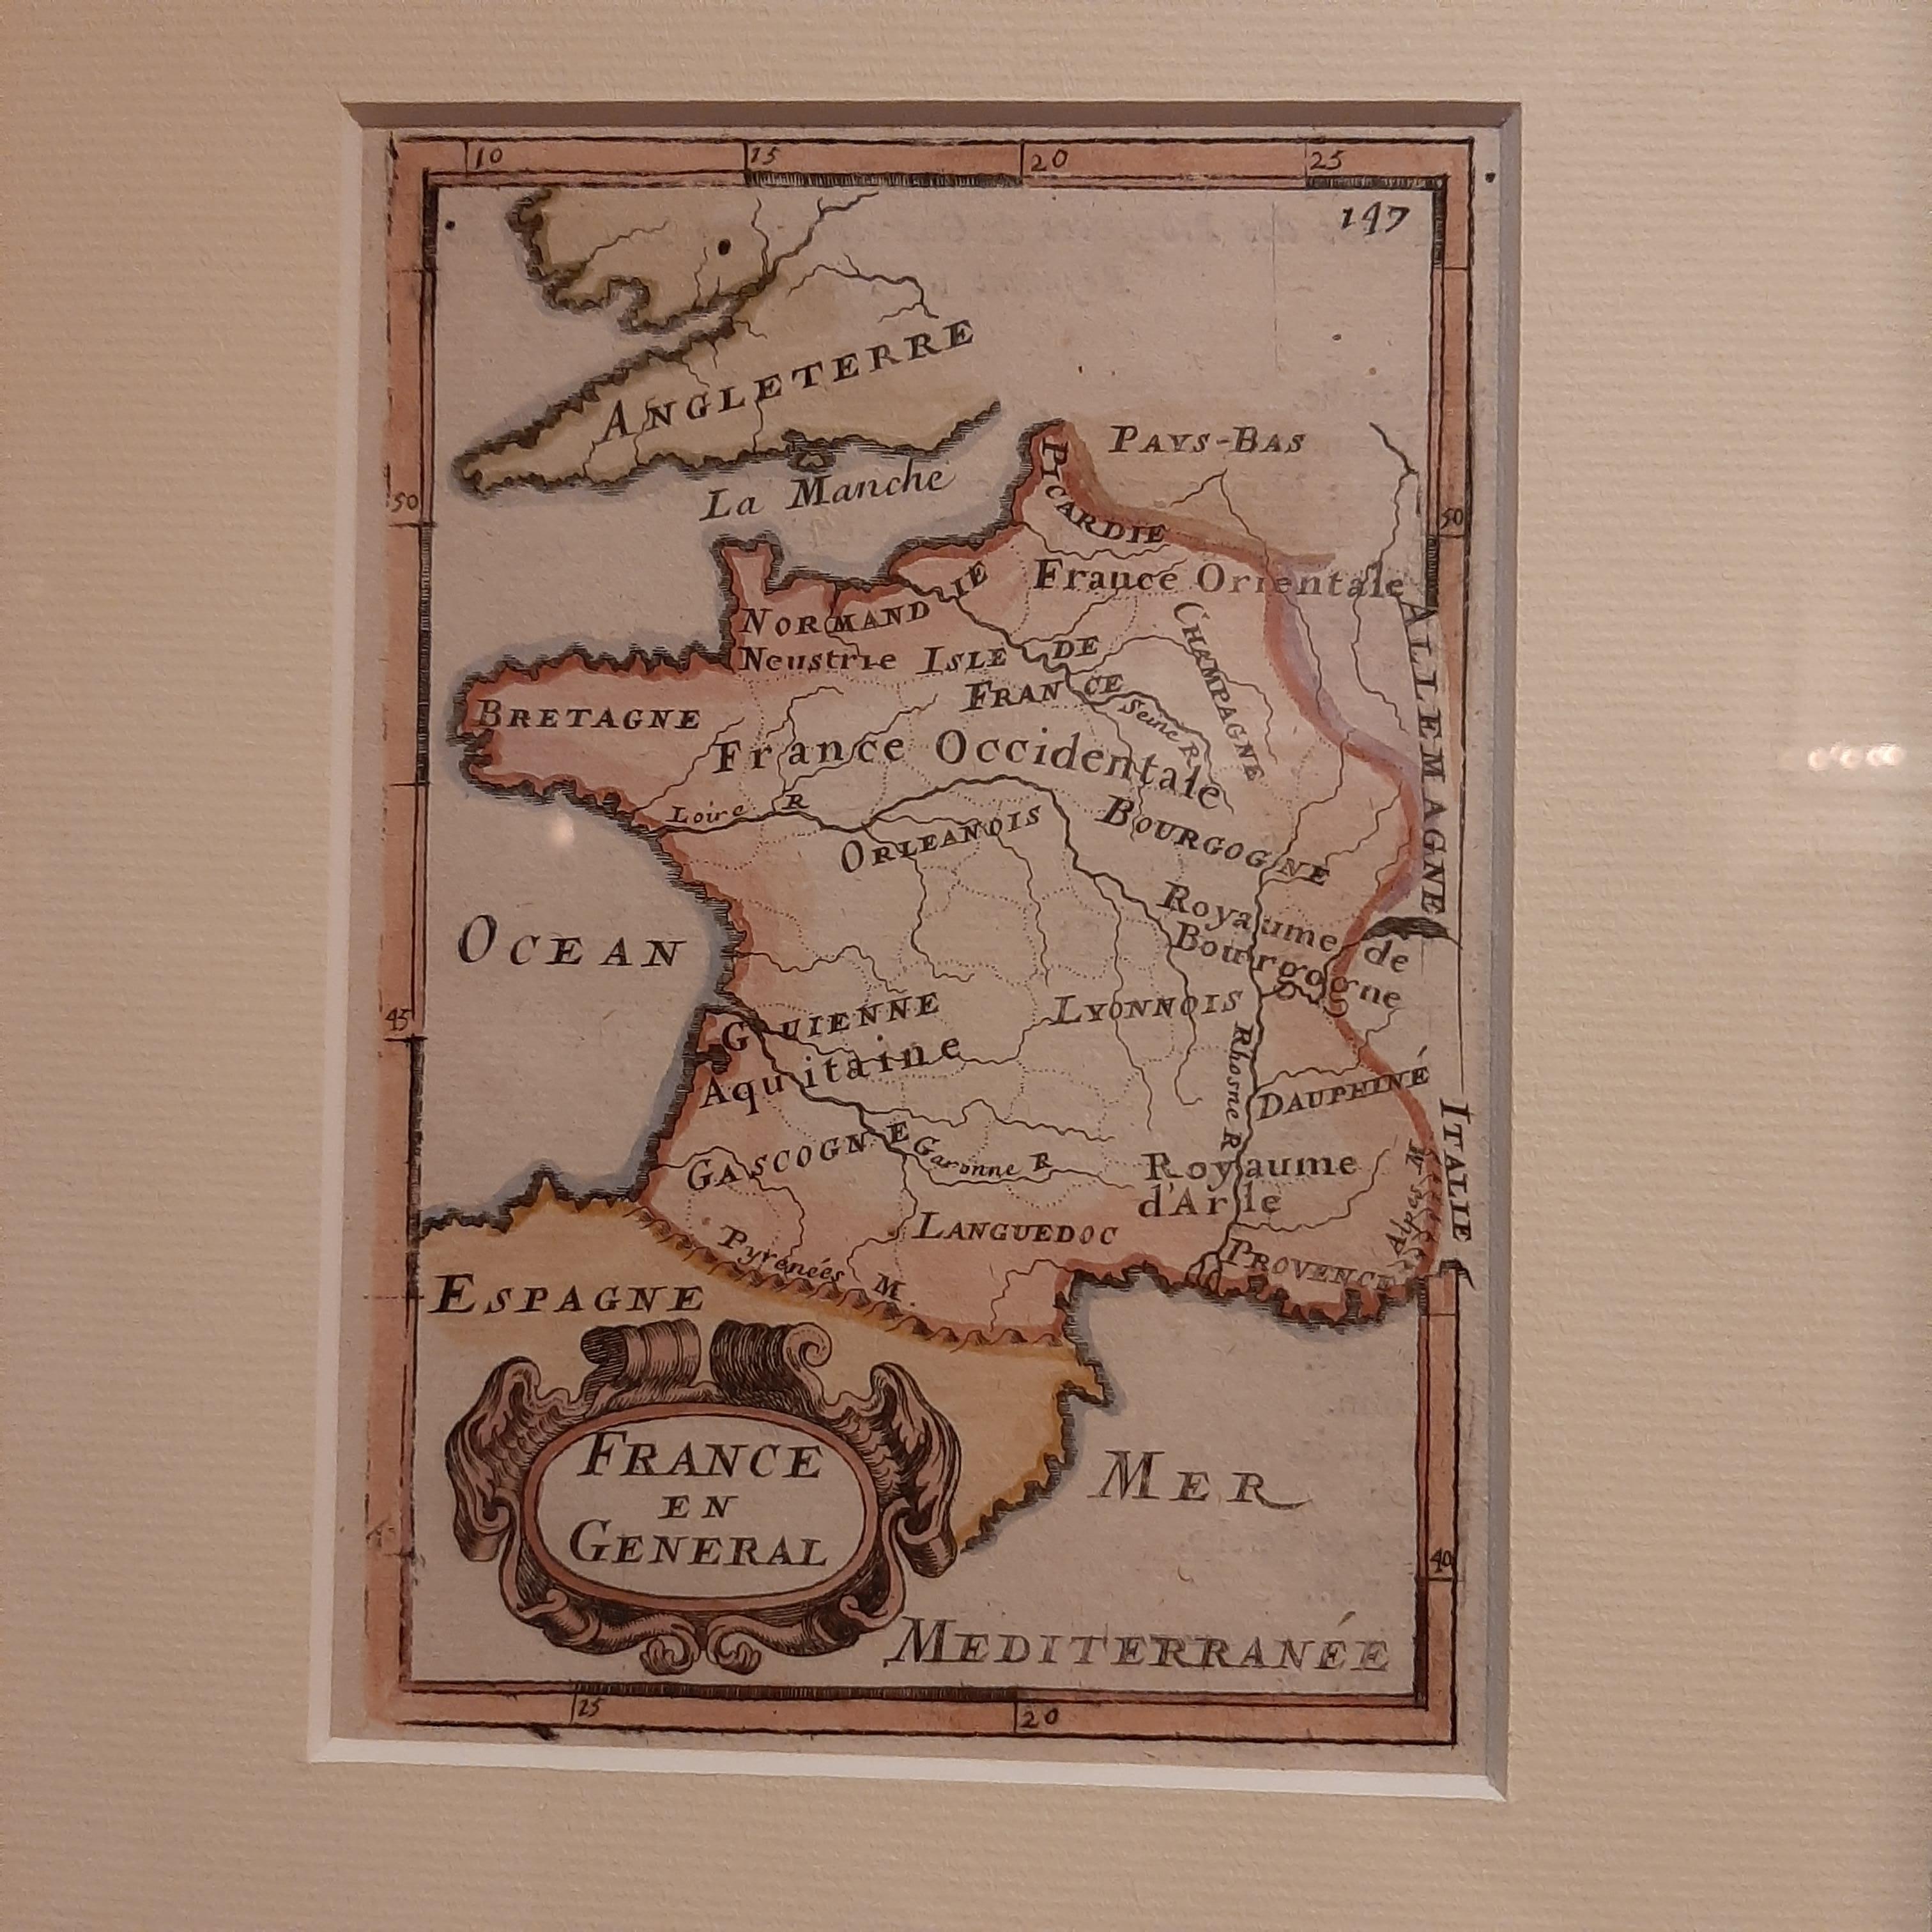 Antique map titled 'France en General'. Detailed miniature map of France. Originates from Mallet's 'Description de l'Univers'.

Frame included. We carefully pack our framed items to ensure safe shipping.